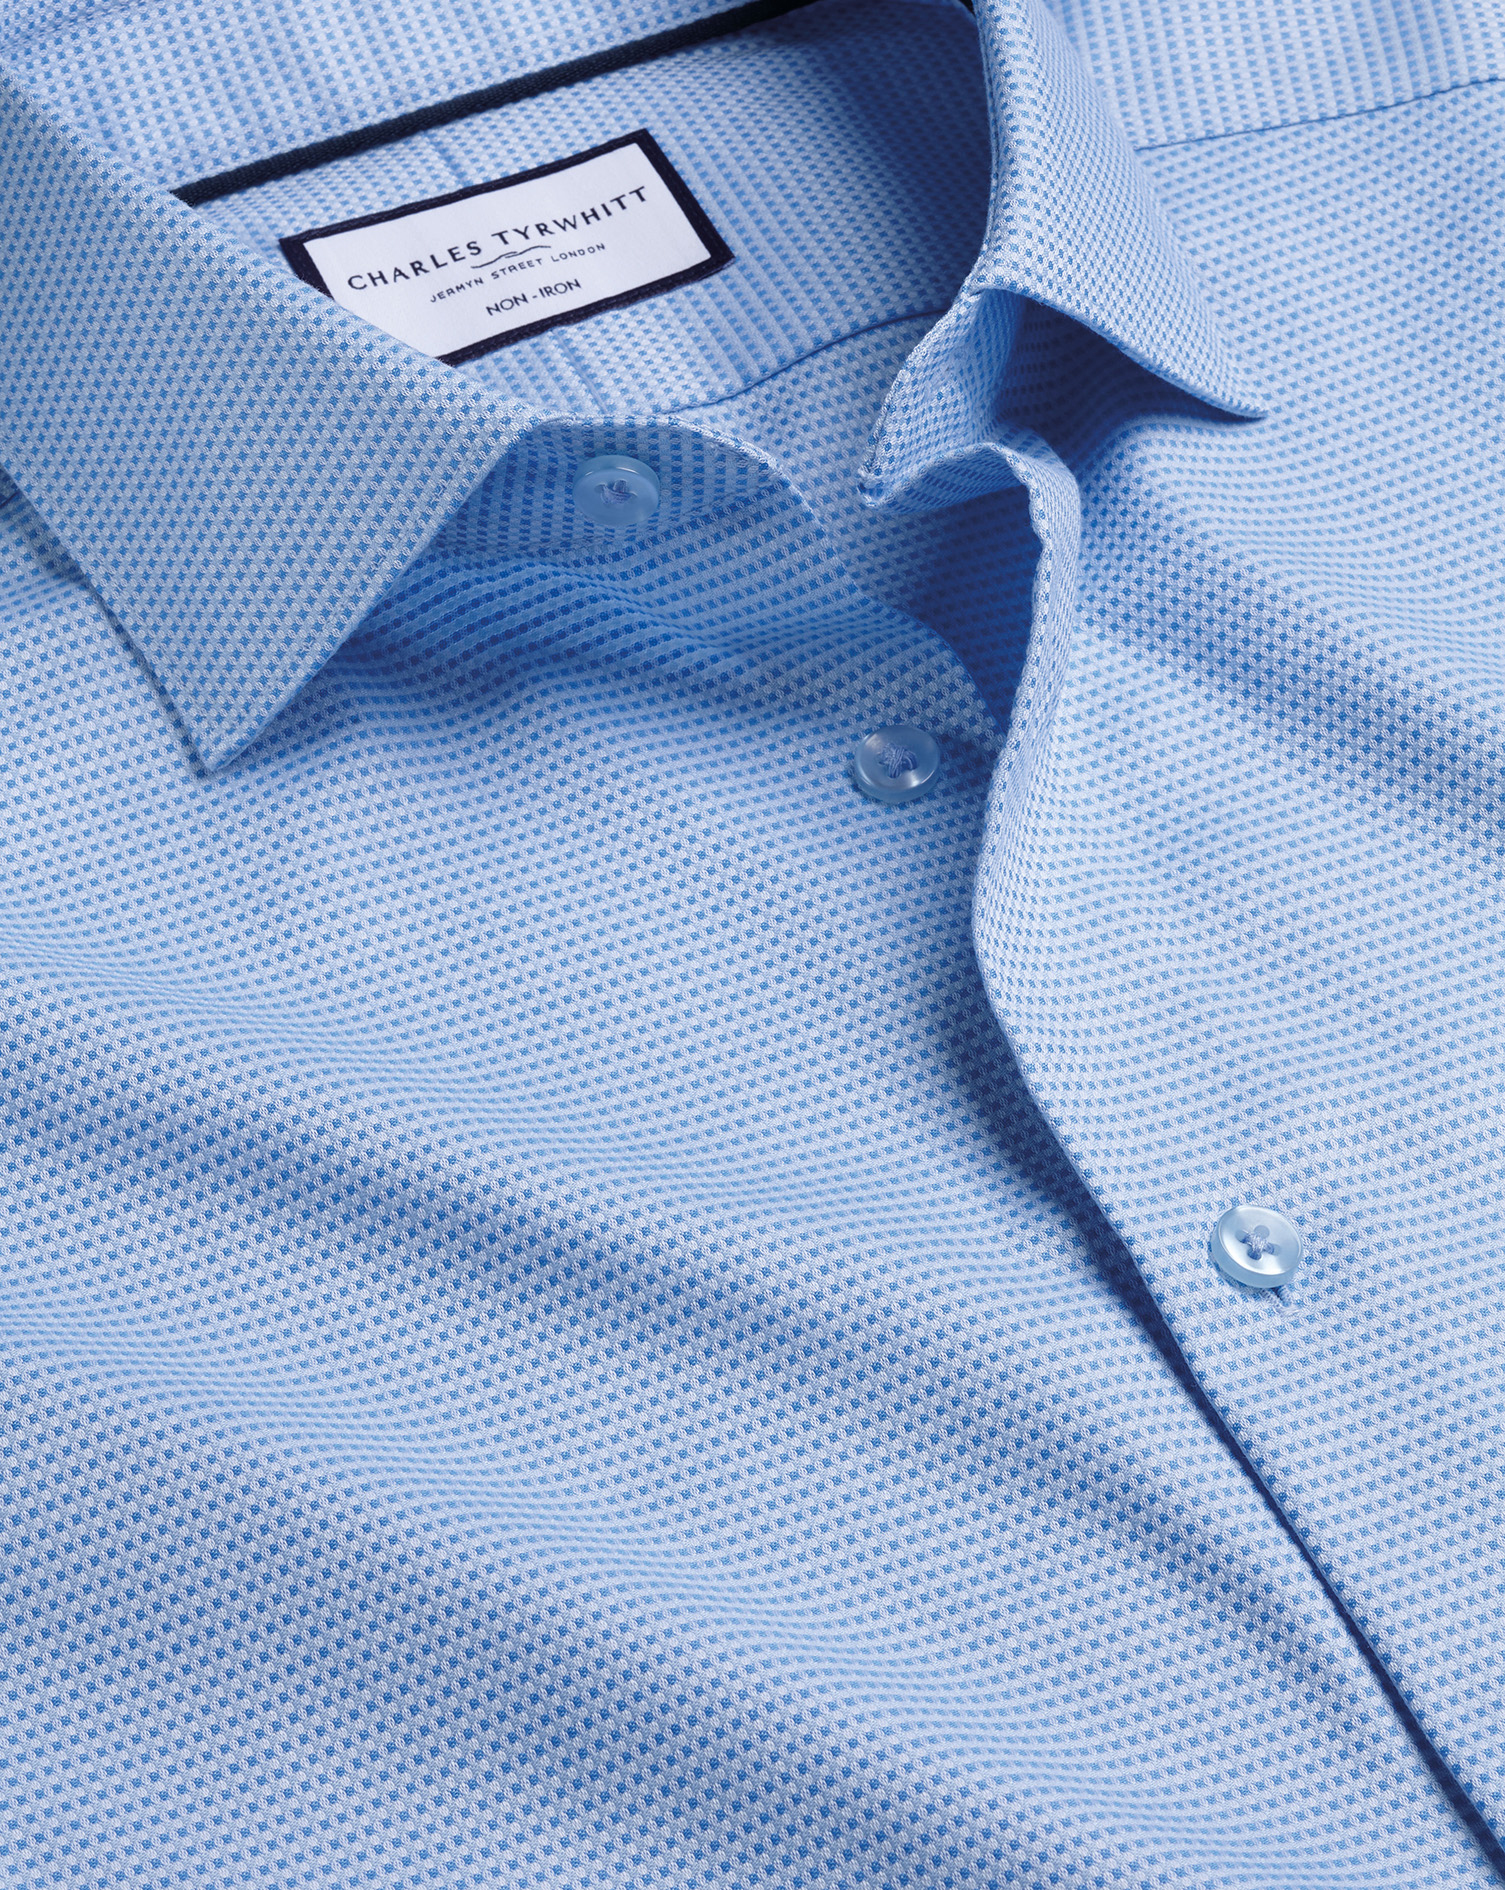 Men's Charles Tyrwhitt Non-Iron Stretch Texture Square Dress Shirt - Sky Blue Single Cuff Size Large